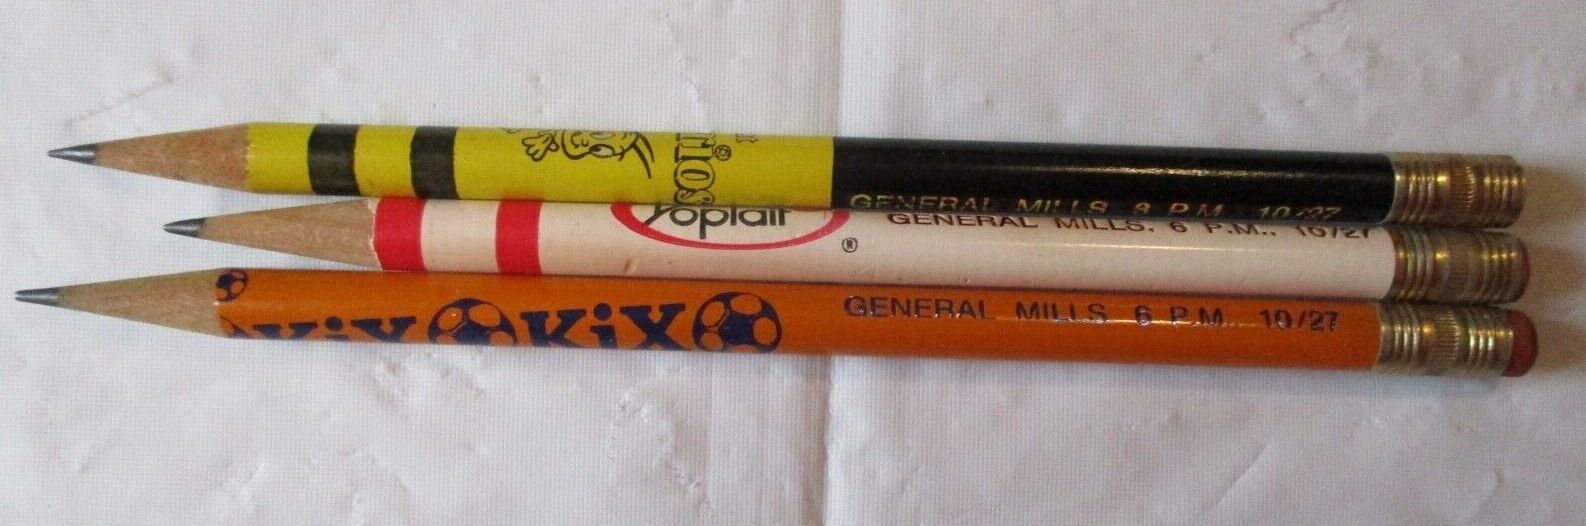 Lot 3 General Mills Pencils Yoplait Yogurt Cheerios Kix Cereal Used